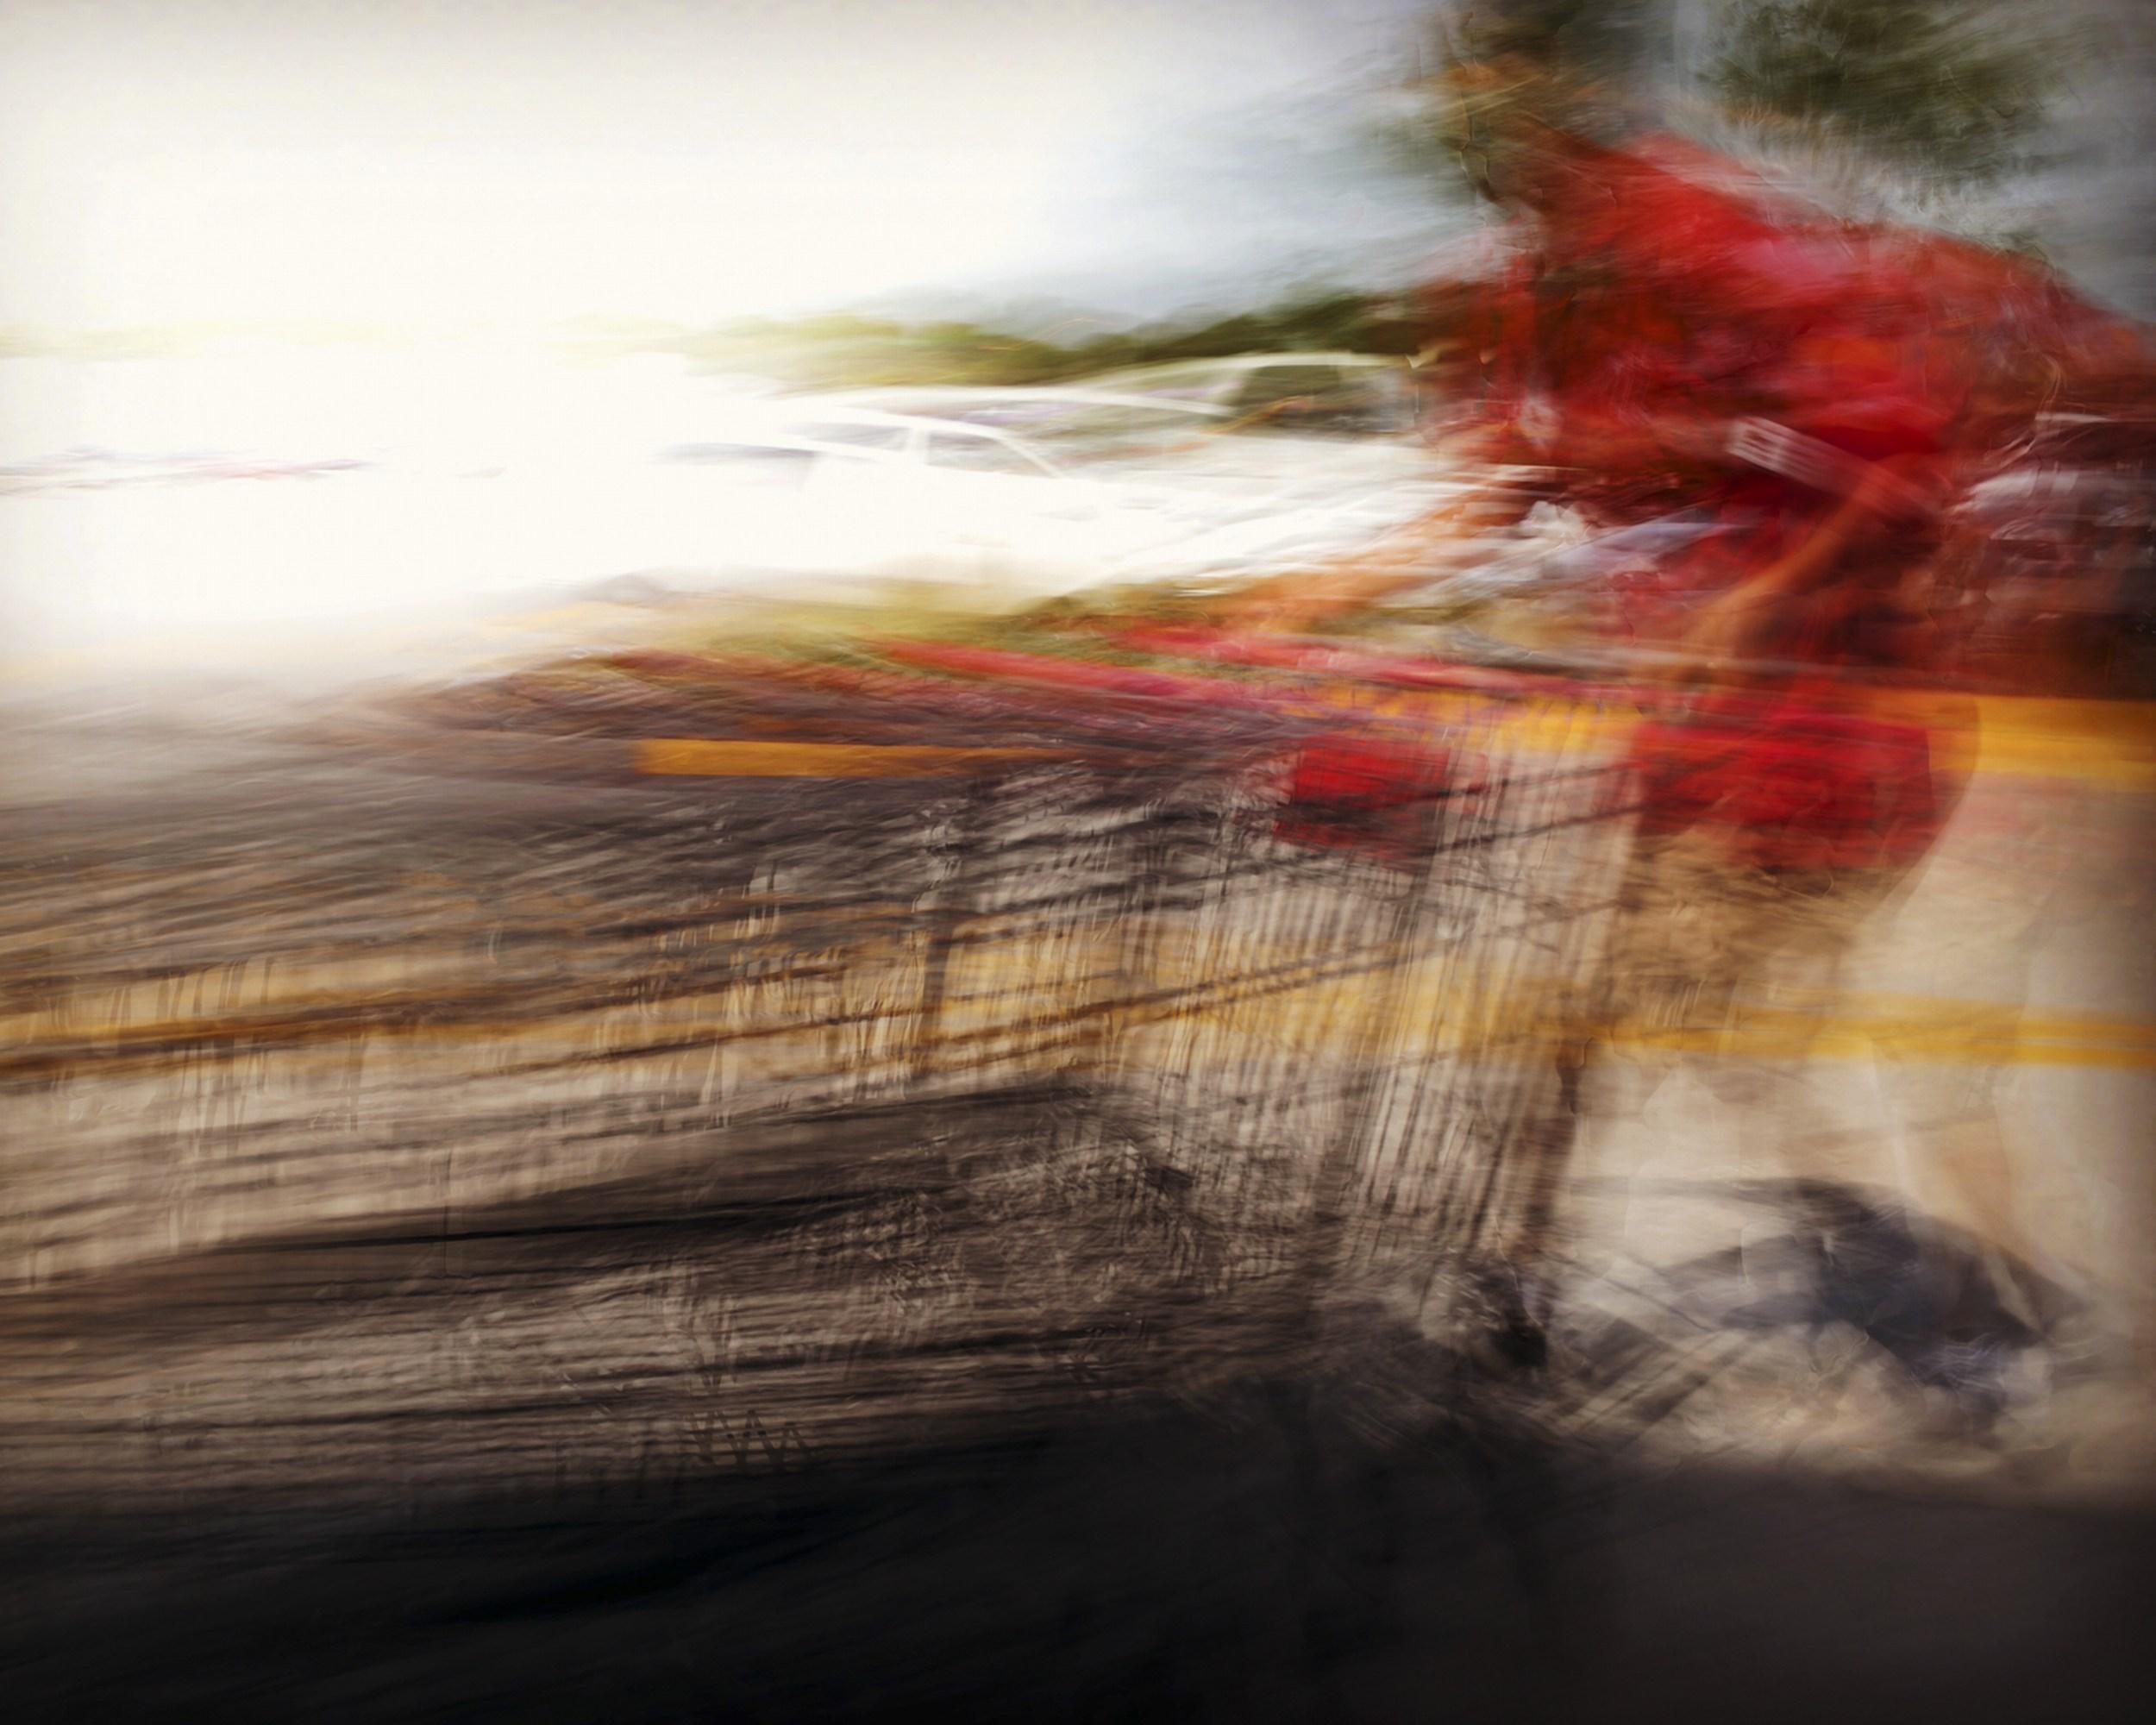 Carts (motion blur, dream image, daily life, vivid colors)